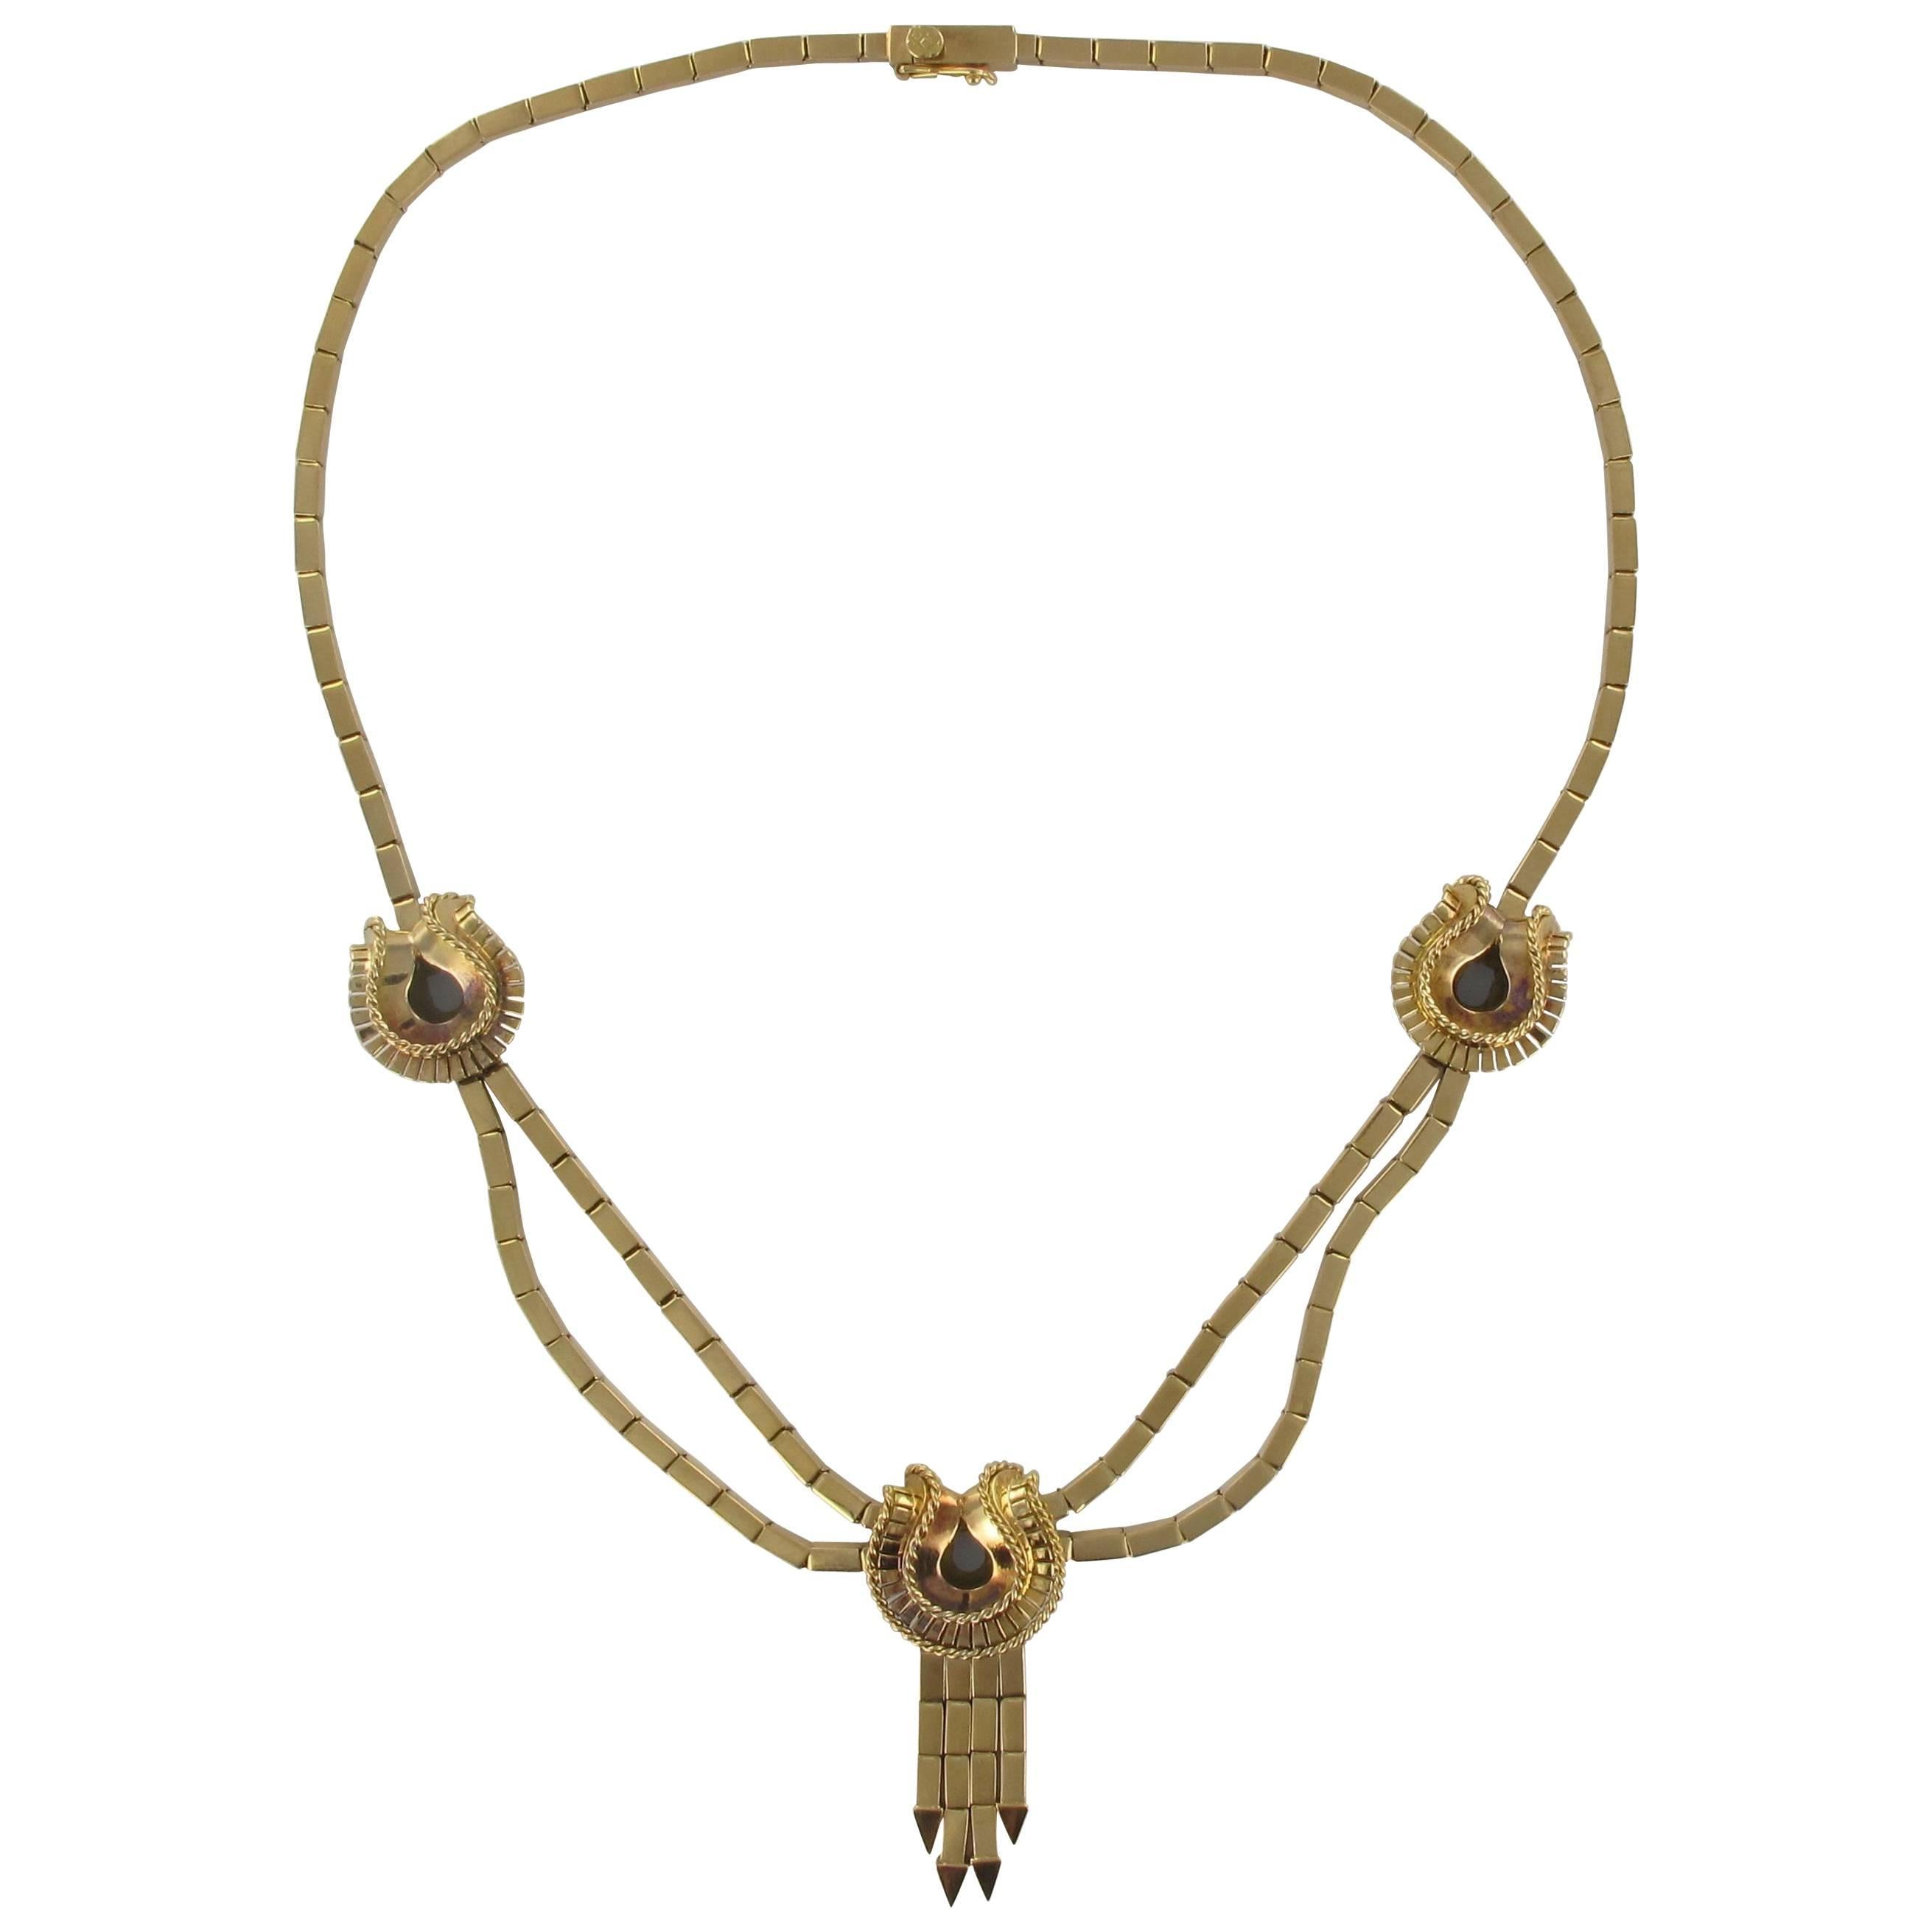 1940s French Retro 18 Karat Gold Mesh Necklace